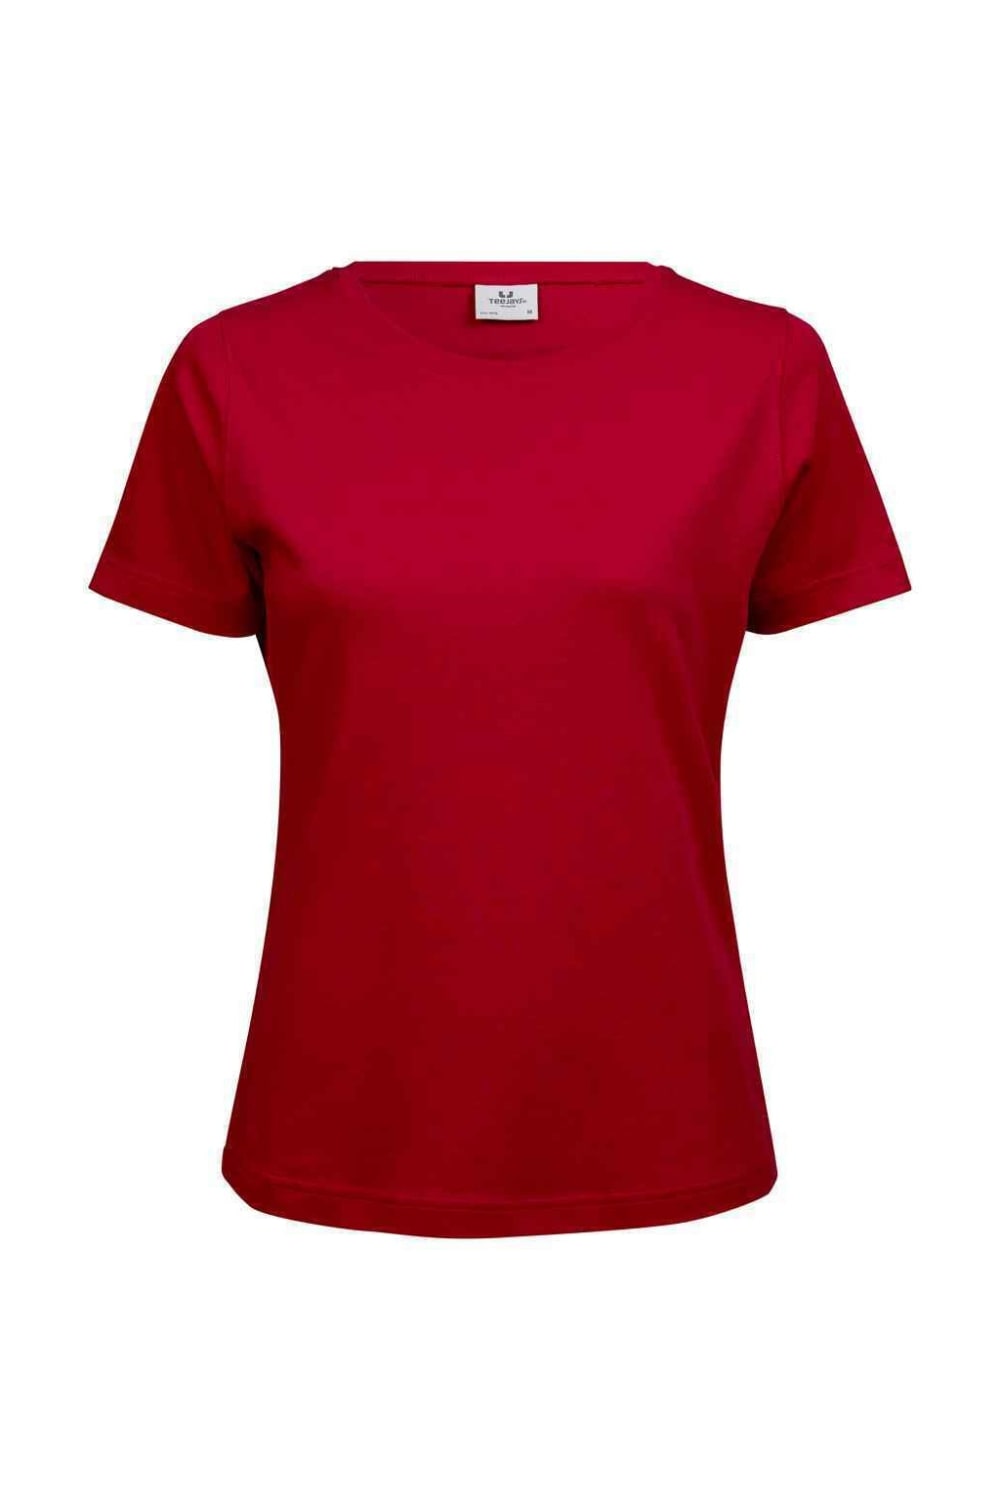 Tee Jays Ladies Interlock T-Shirt (Red)